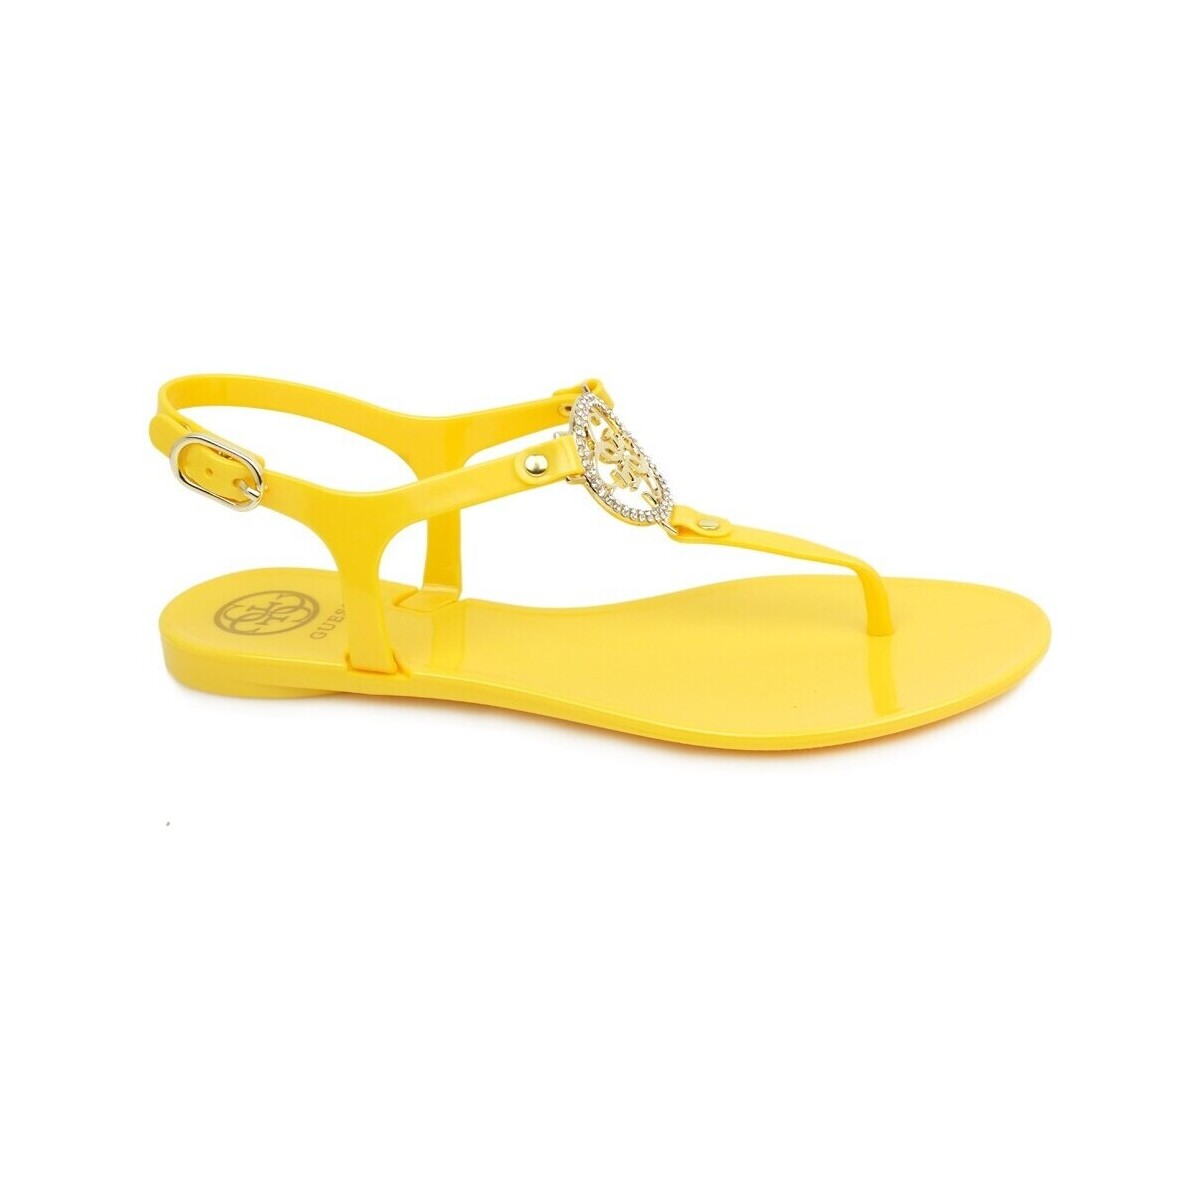 Chaussures Femme Bottes Guess Sandalo Yellow FL6JACRUB21 Jaune